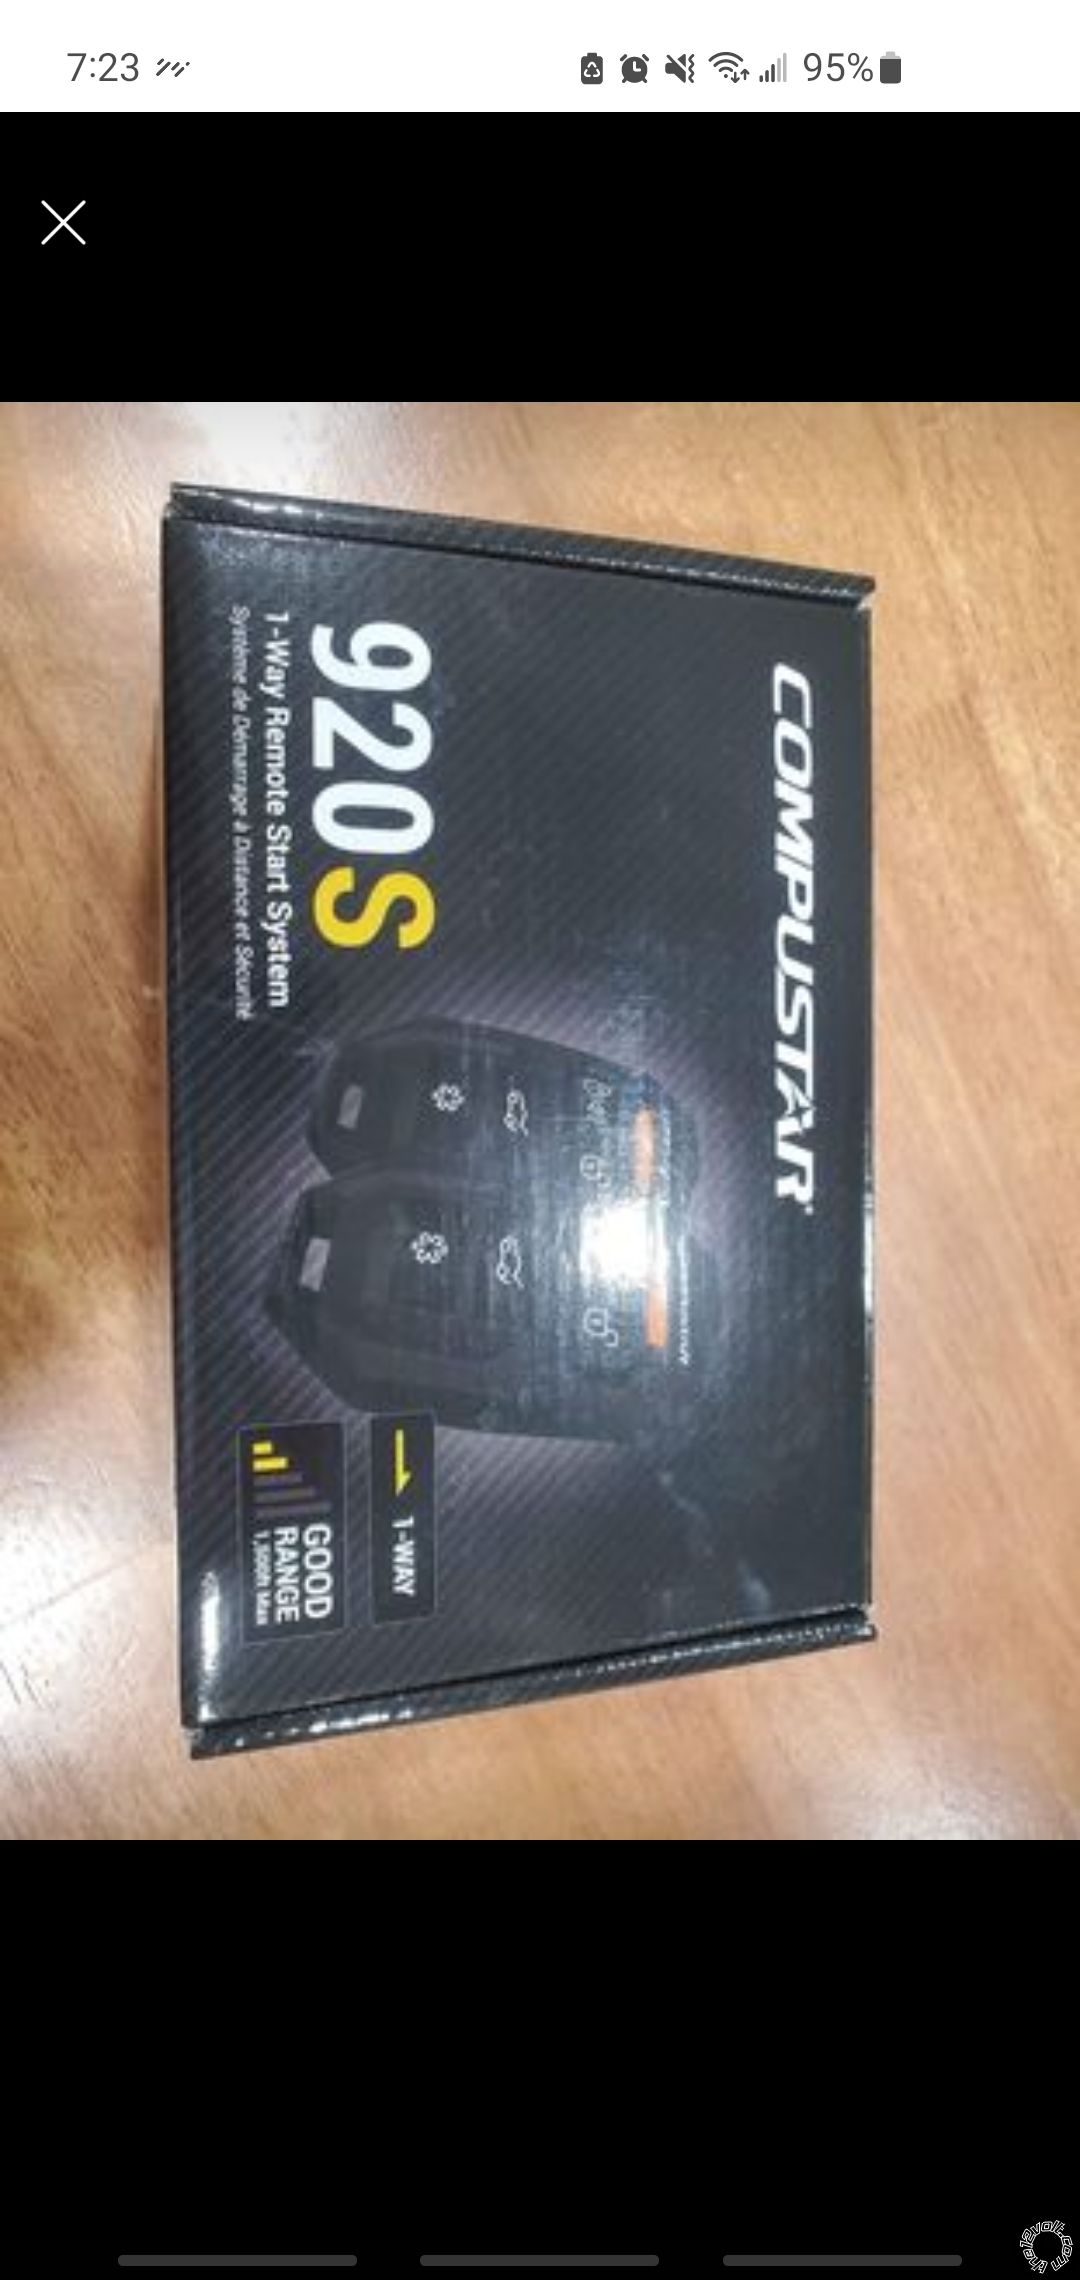 For Sale, Compustar 920S Remote Starter -- posted image.